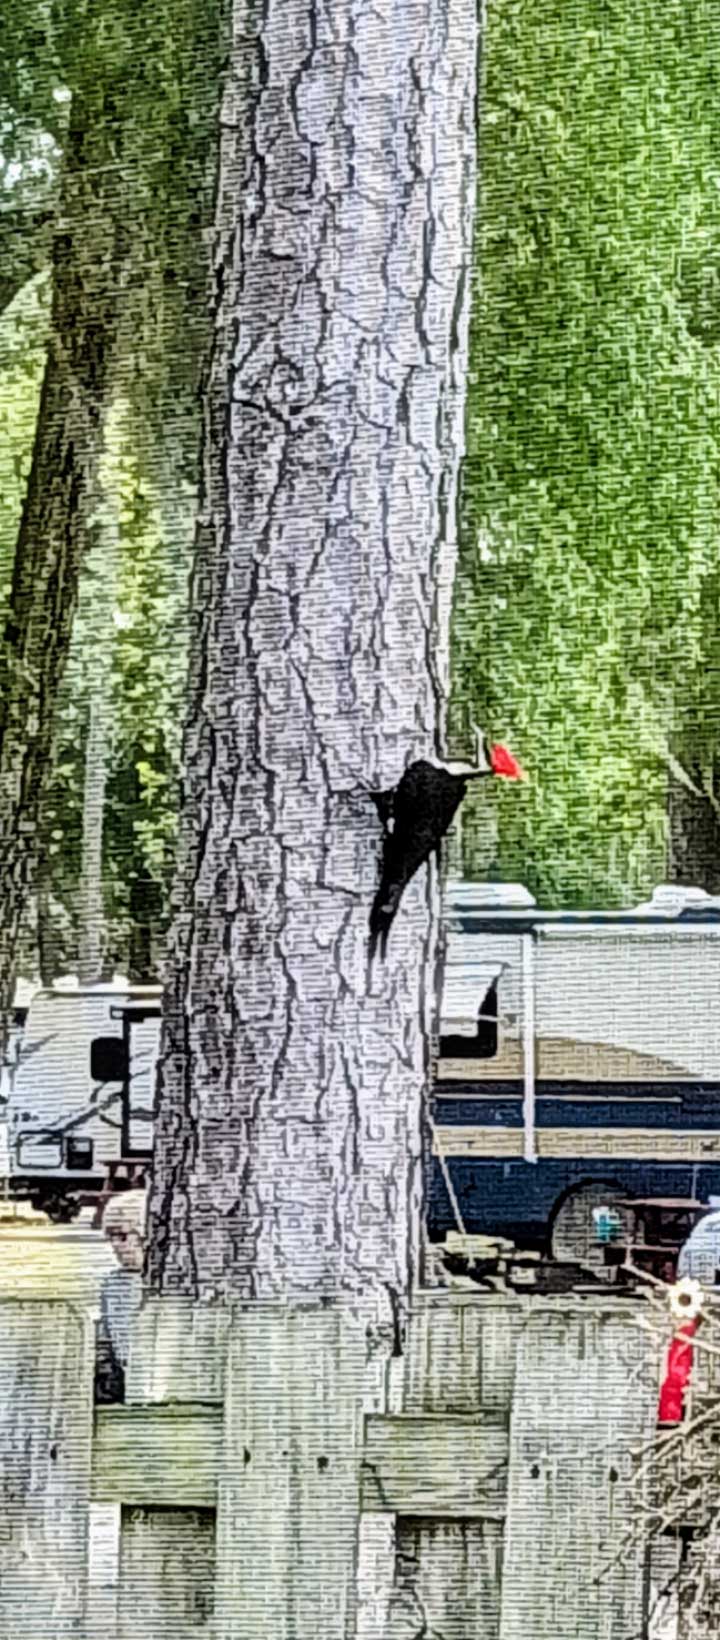 Pileated woodpecker at Lake Waldena Resort